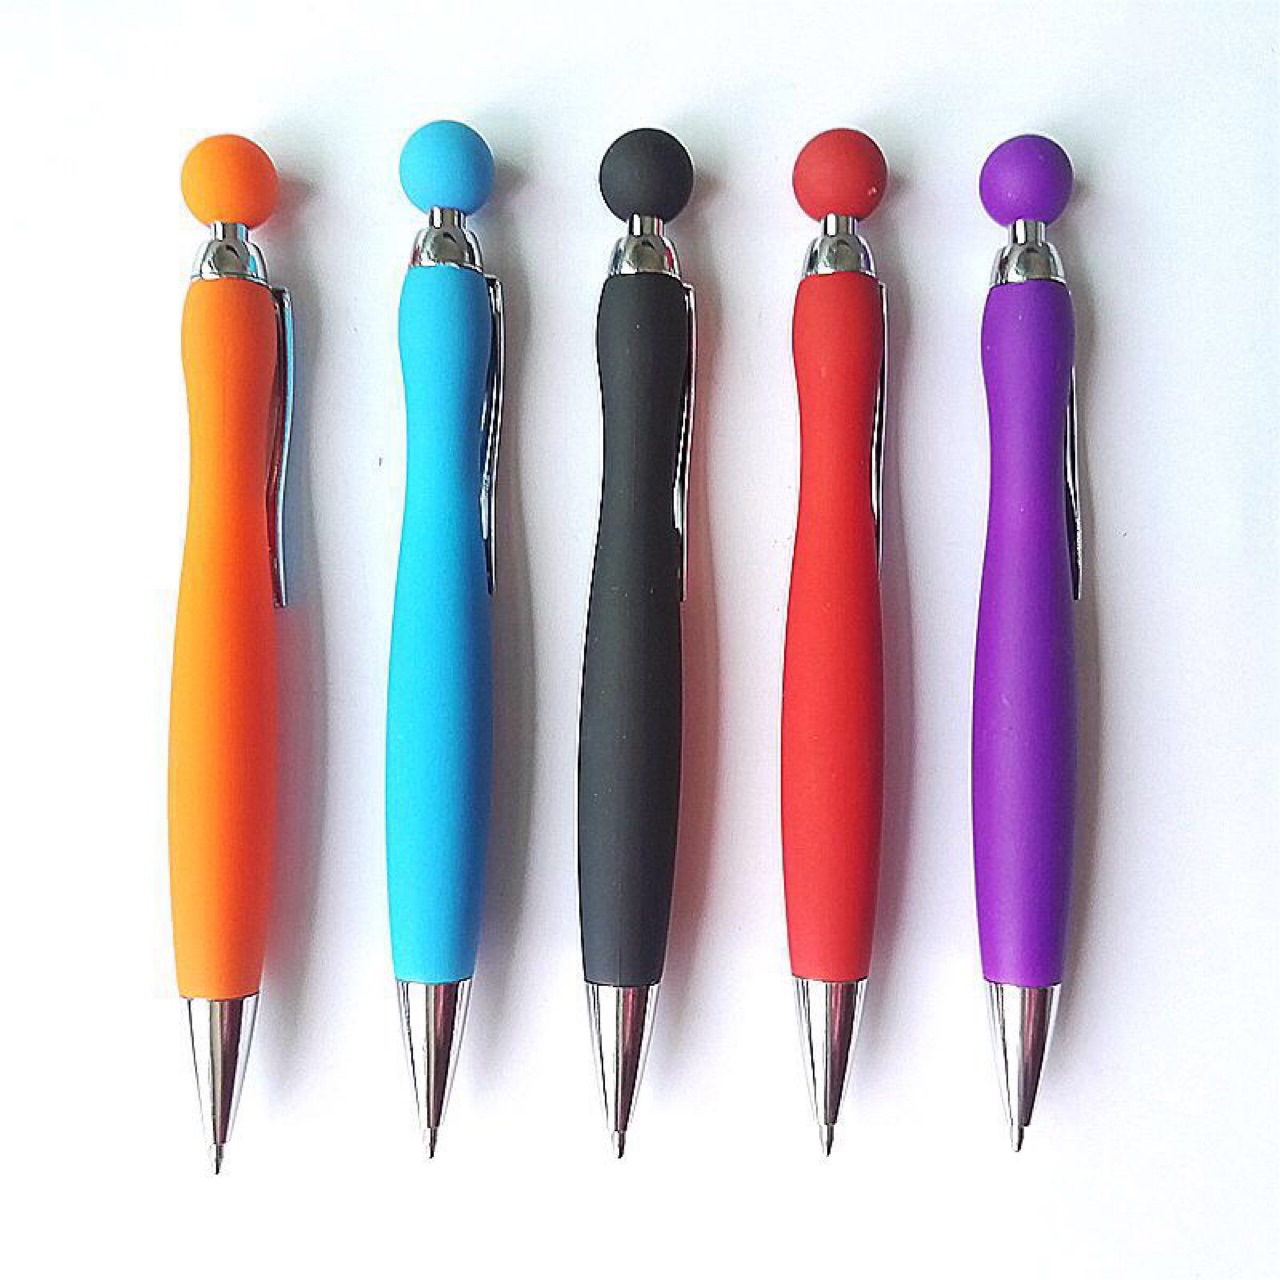 rubberized Ergonomic plastic pen